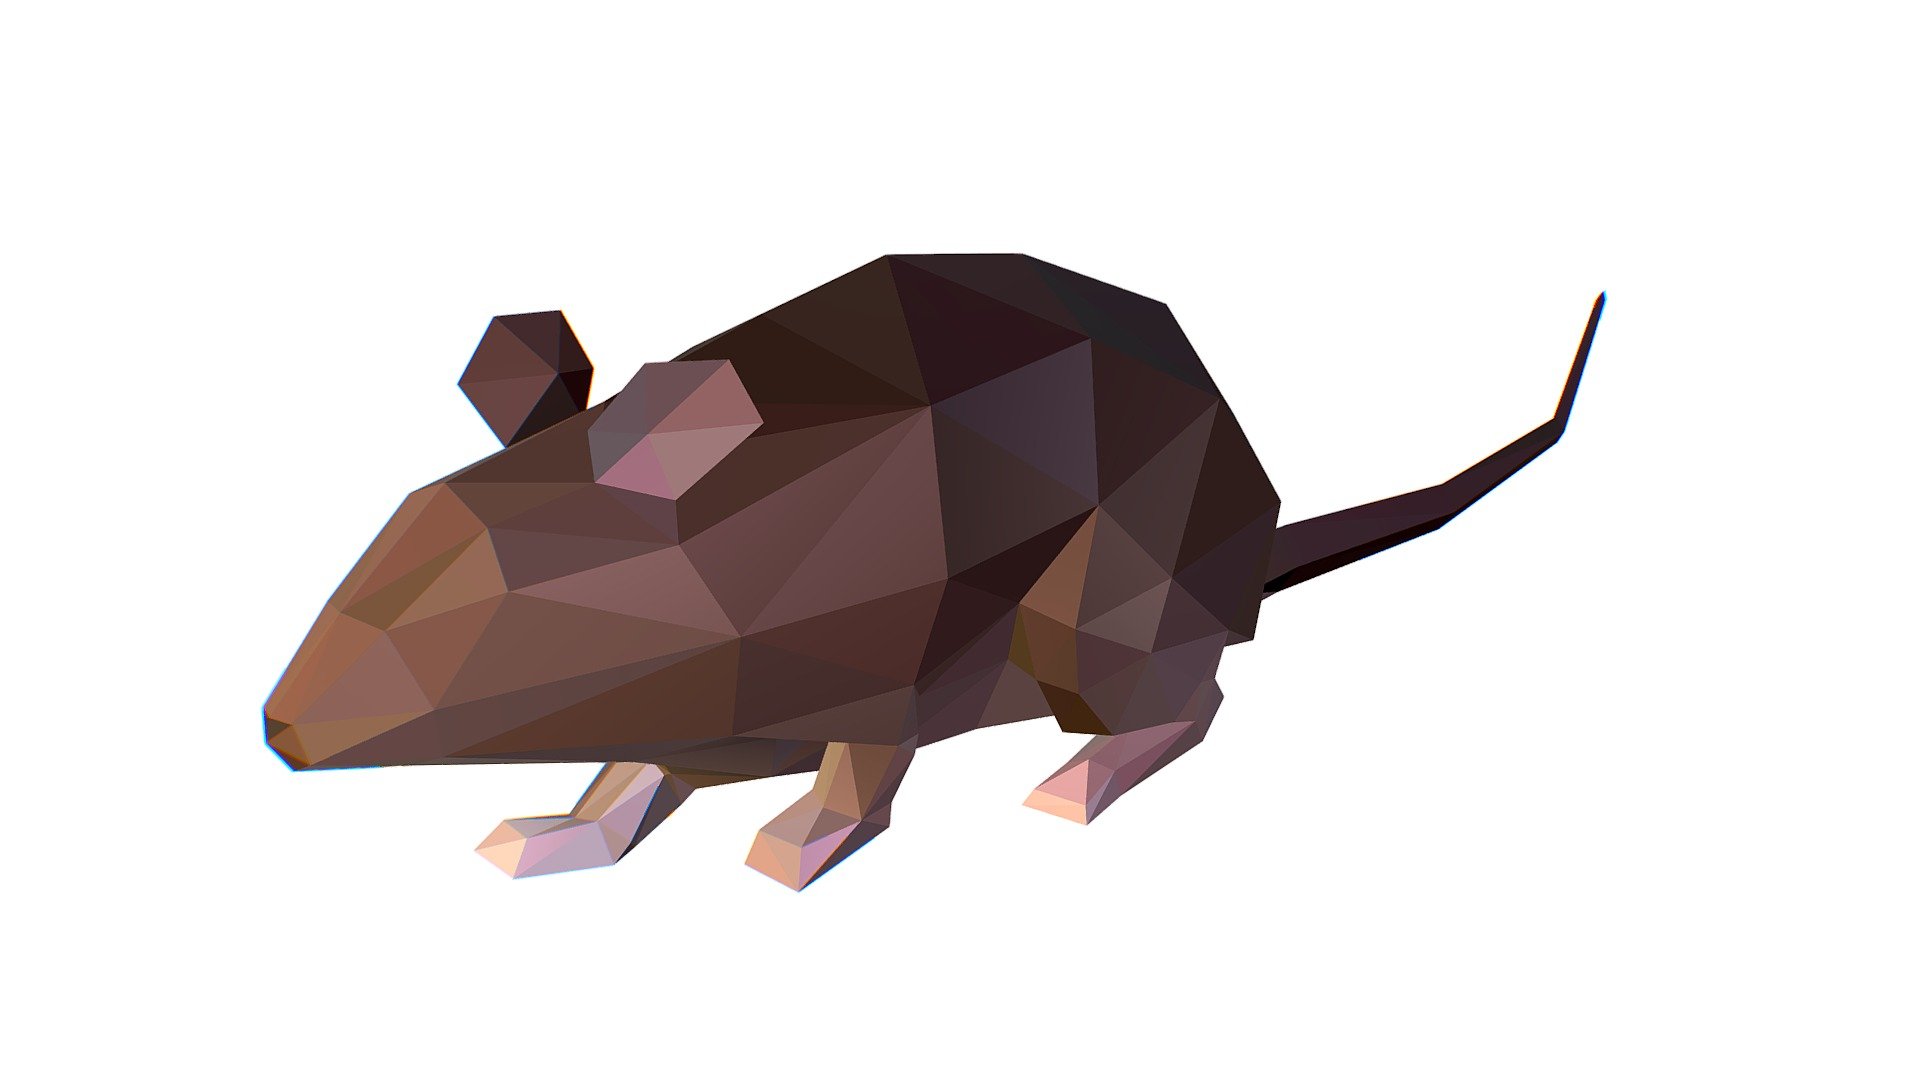 Animated Rat Mouse Lowpoly Art Style
Animation layers:
Run         1-7
Walk       8-27
Fallow    21-38
idle        138-178 - Animated Rat Mouse Lowpoly Art Style - Buy Royalty Free 3D model by Oleg Shuldiakov (@shuographics) 3d model